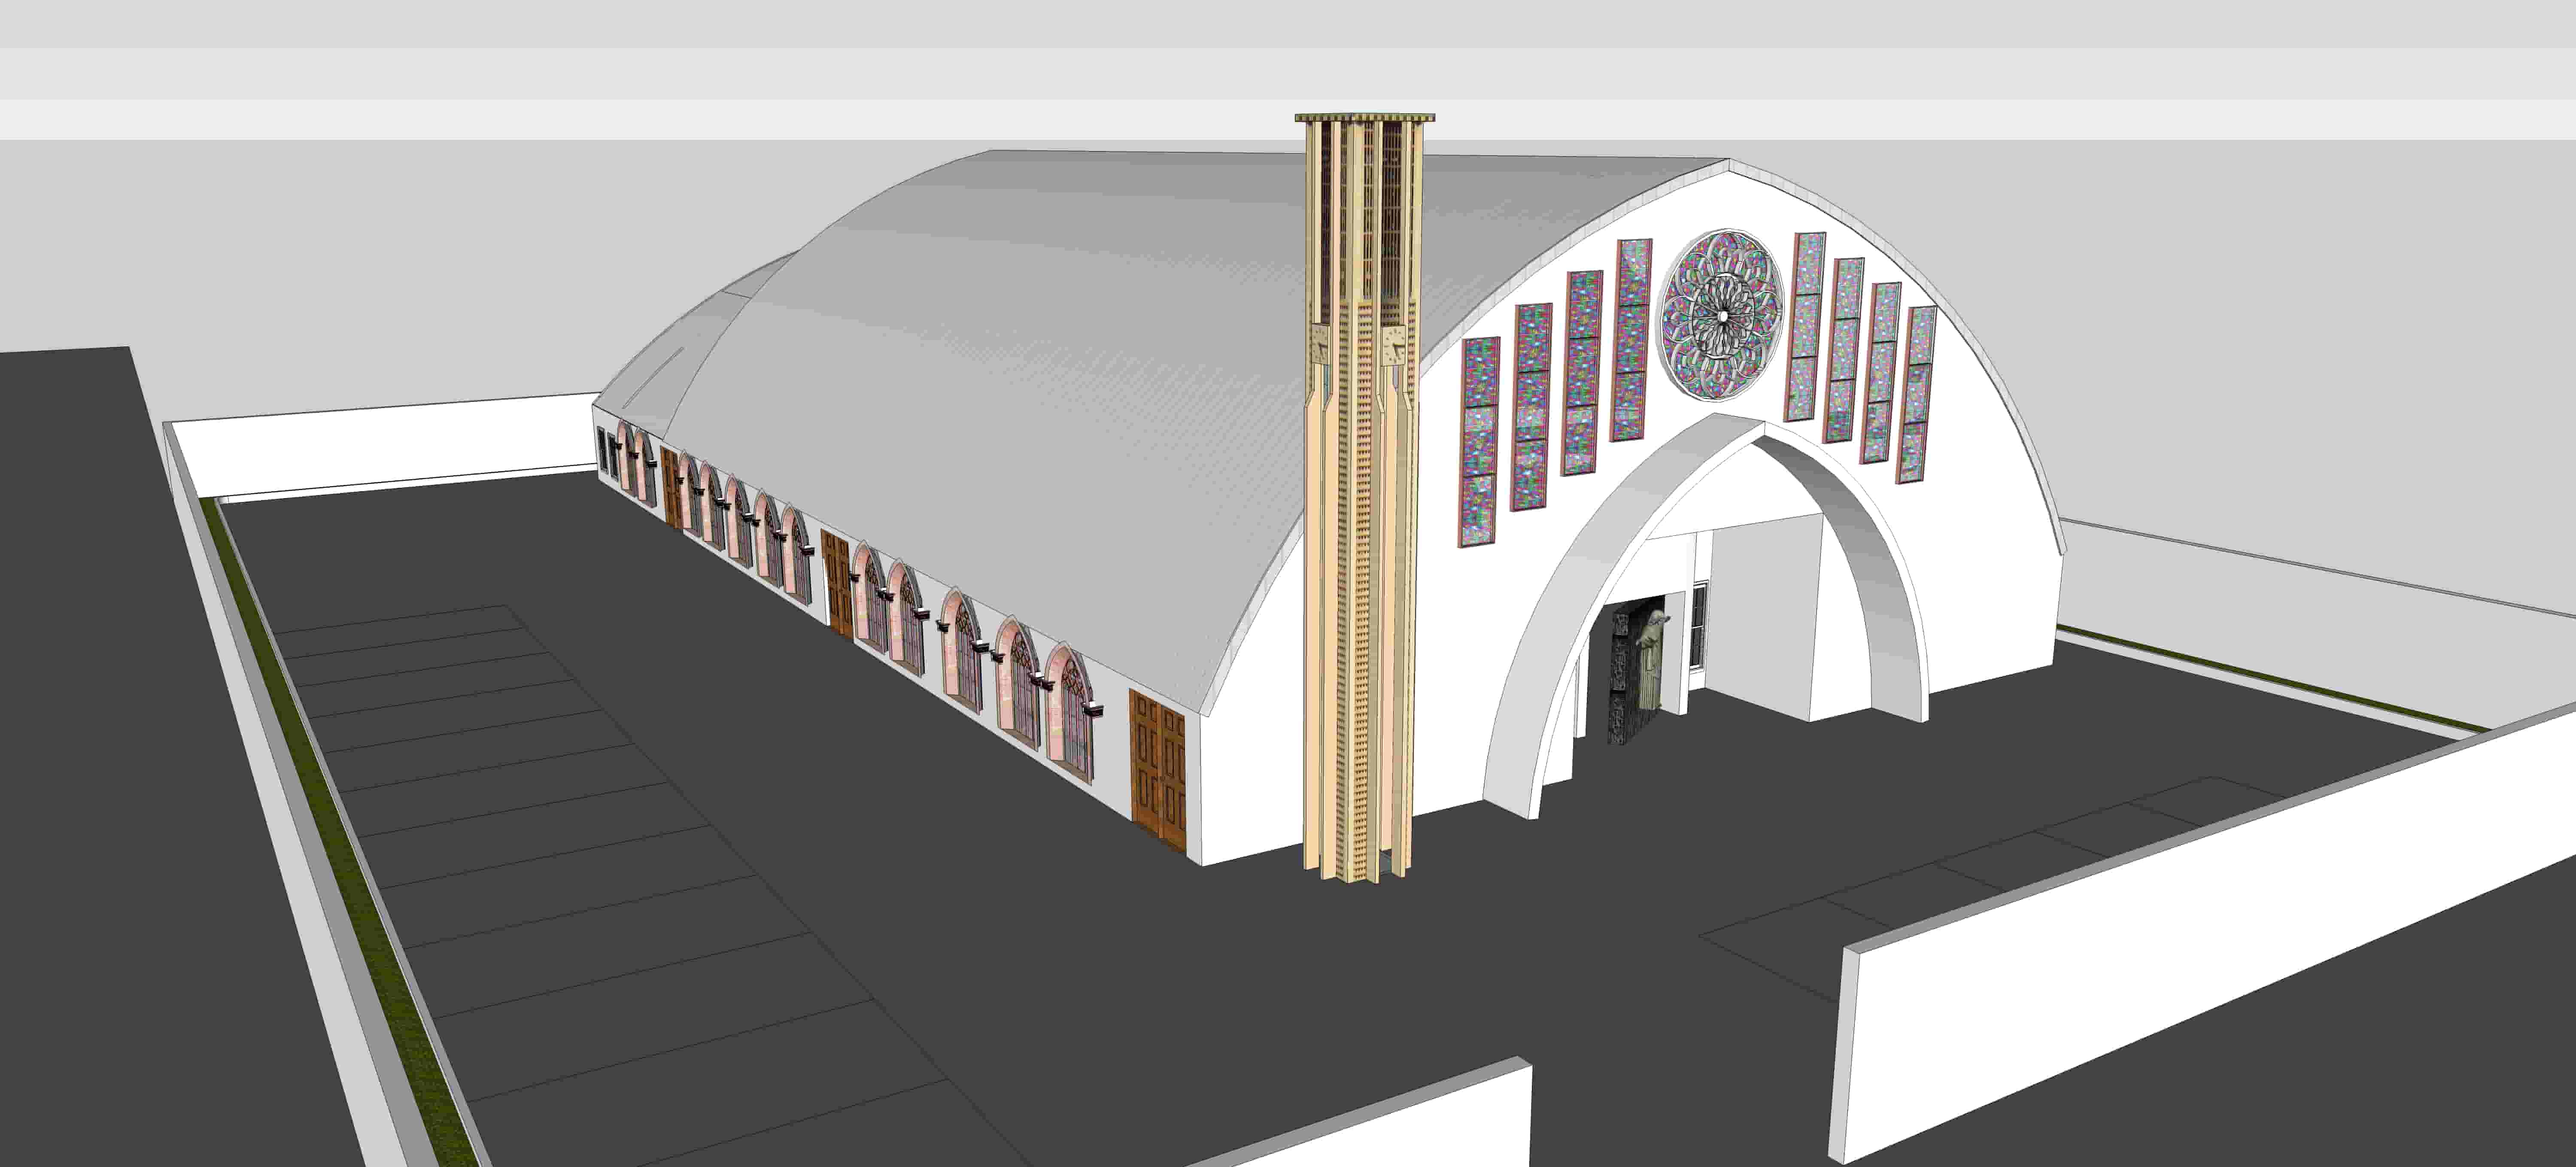 Proposed Church Design